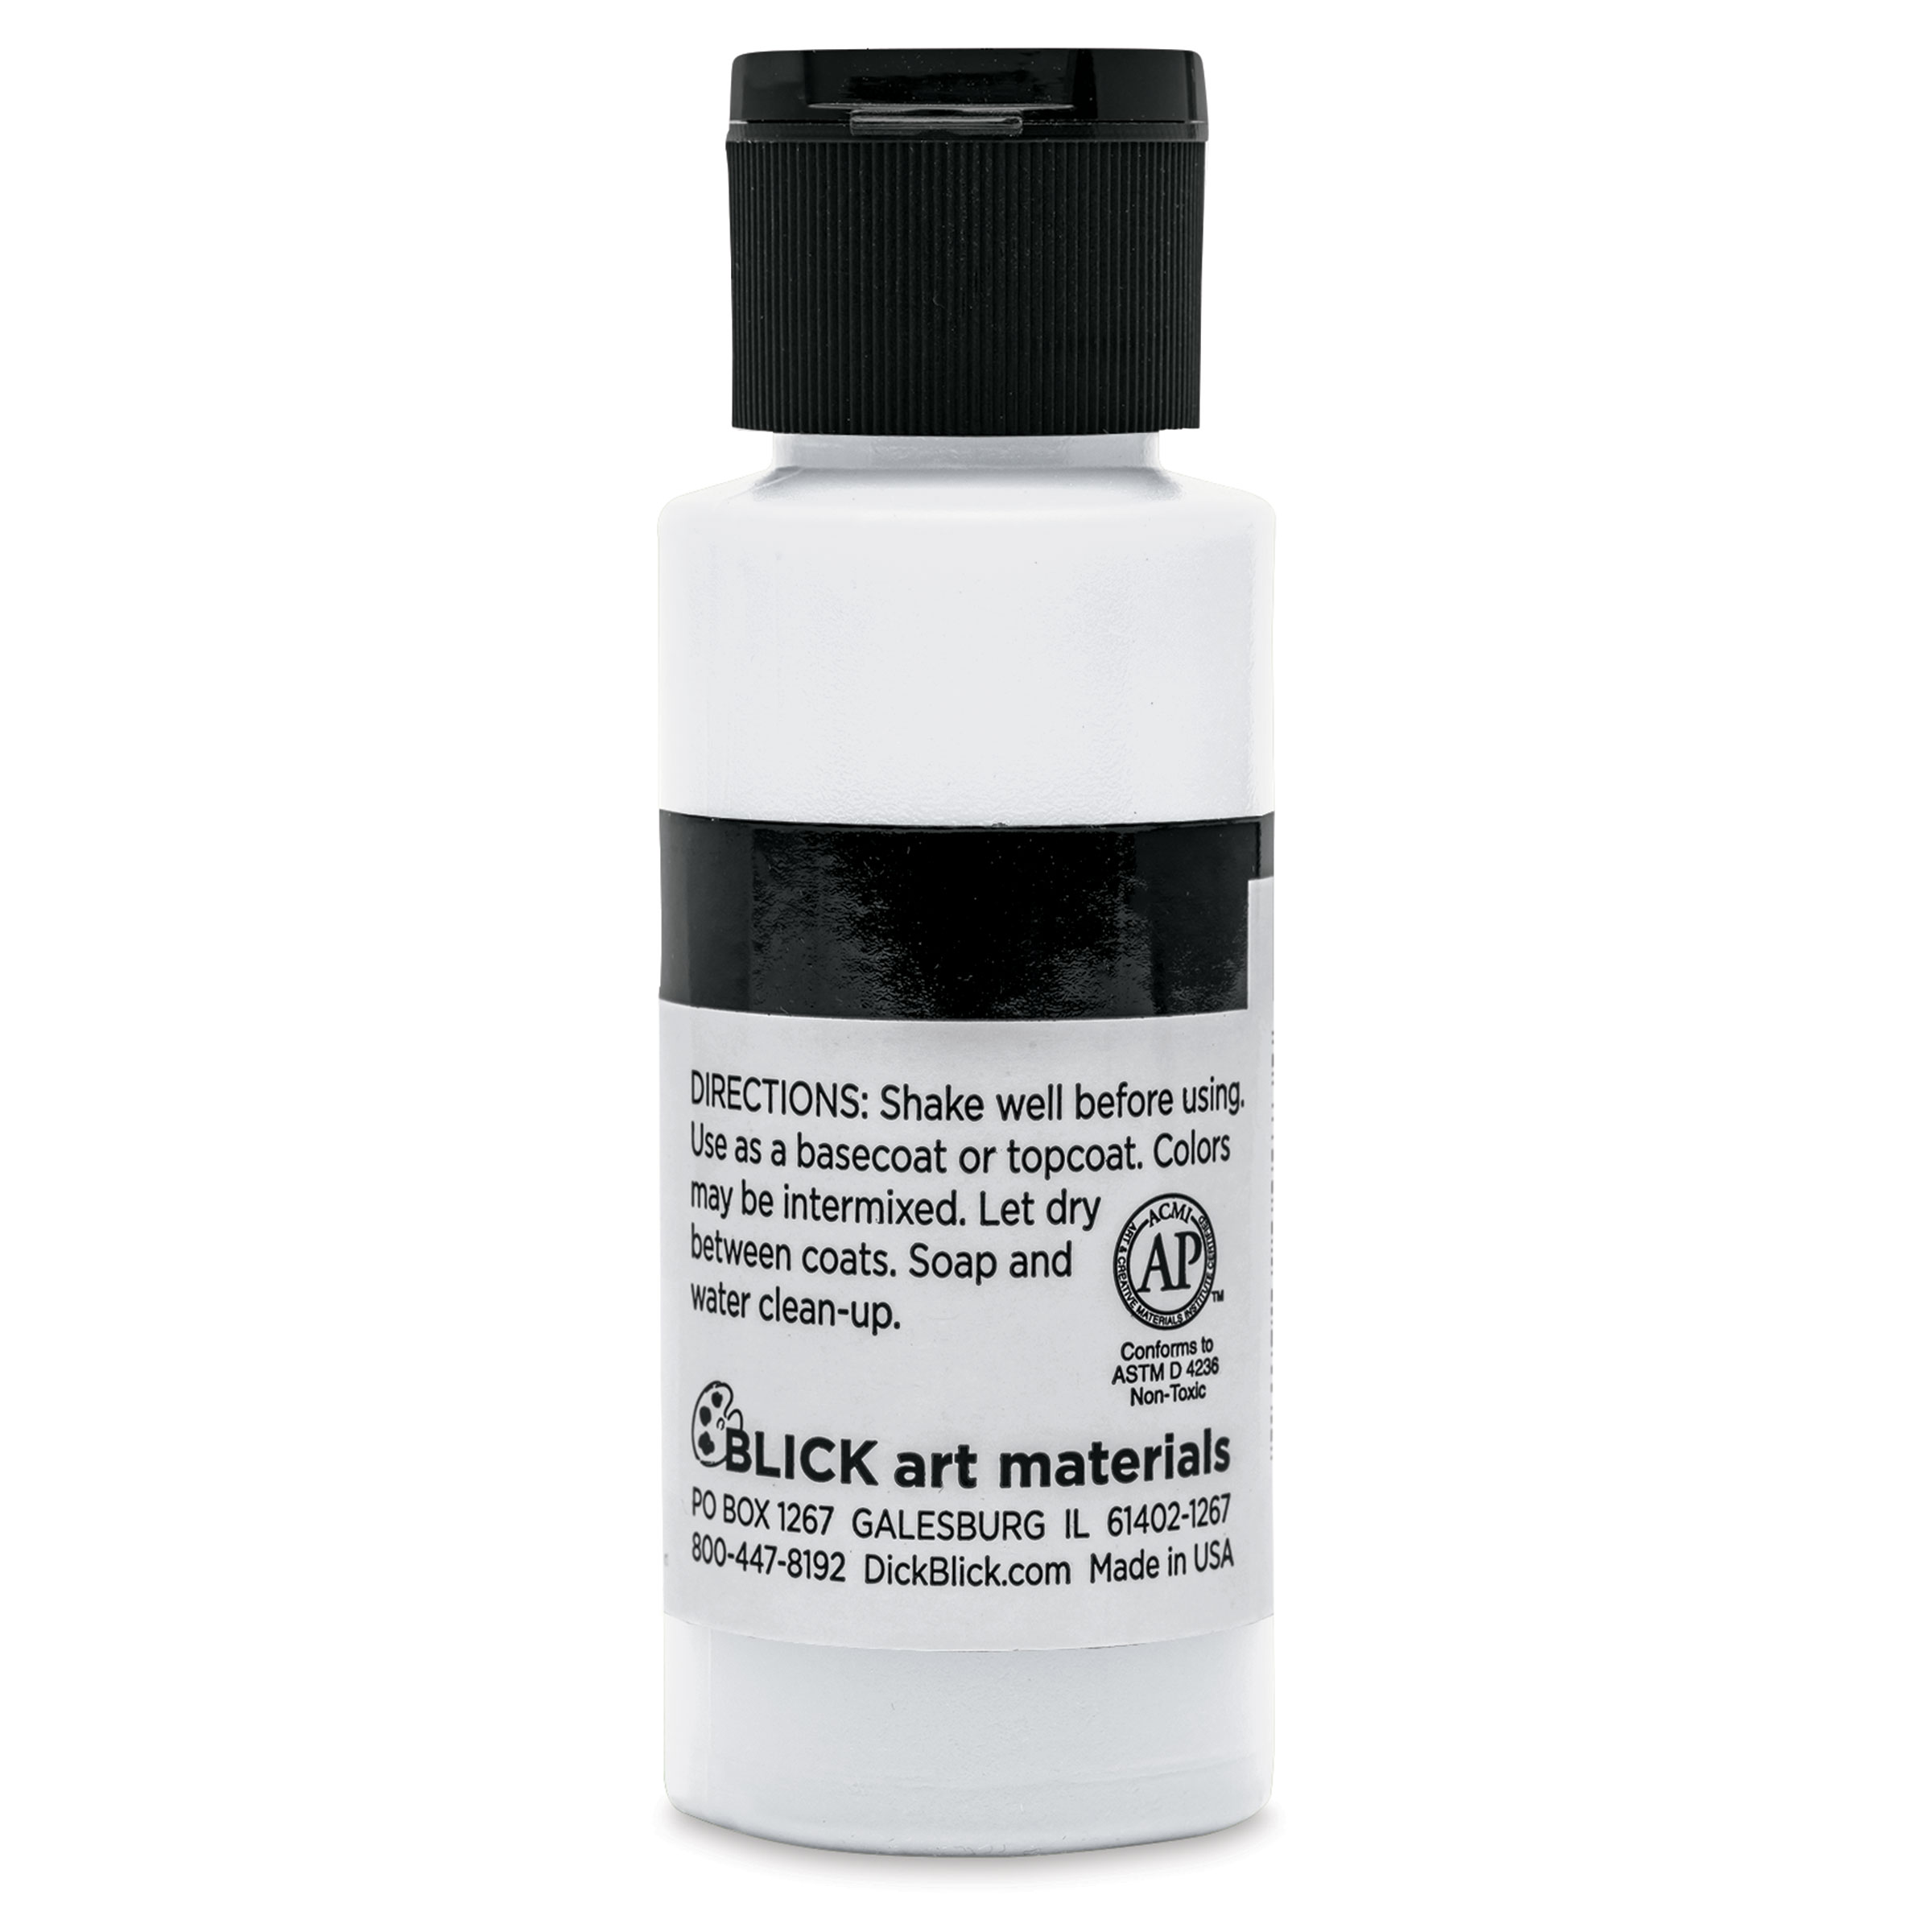 Blick Matte Acrylics - Basic Colors, Set of 7, 2 oz Bottles